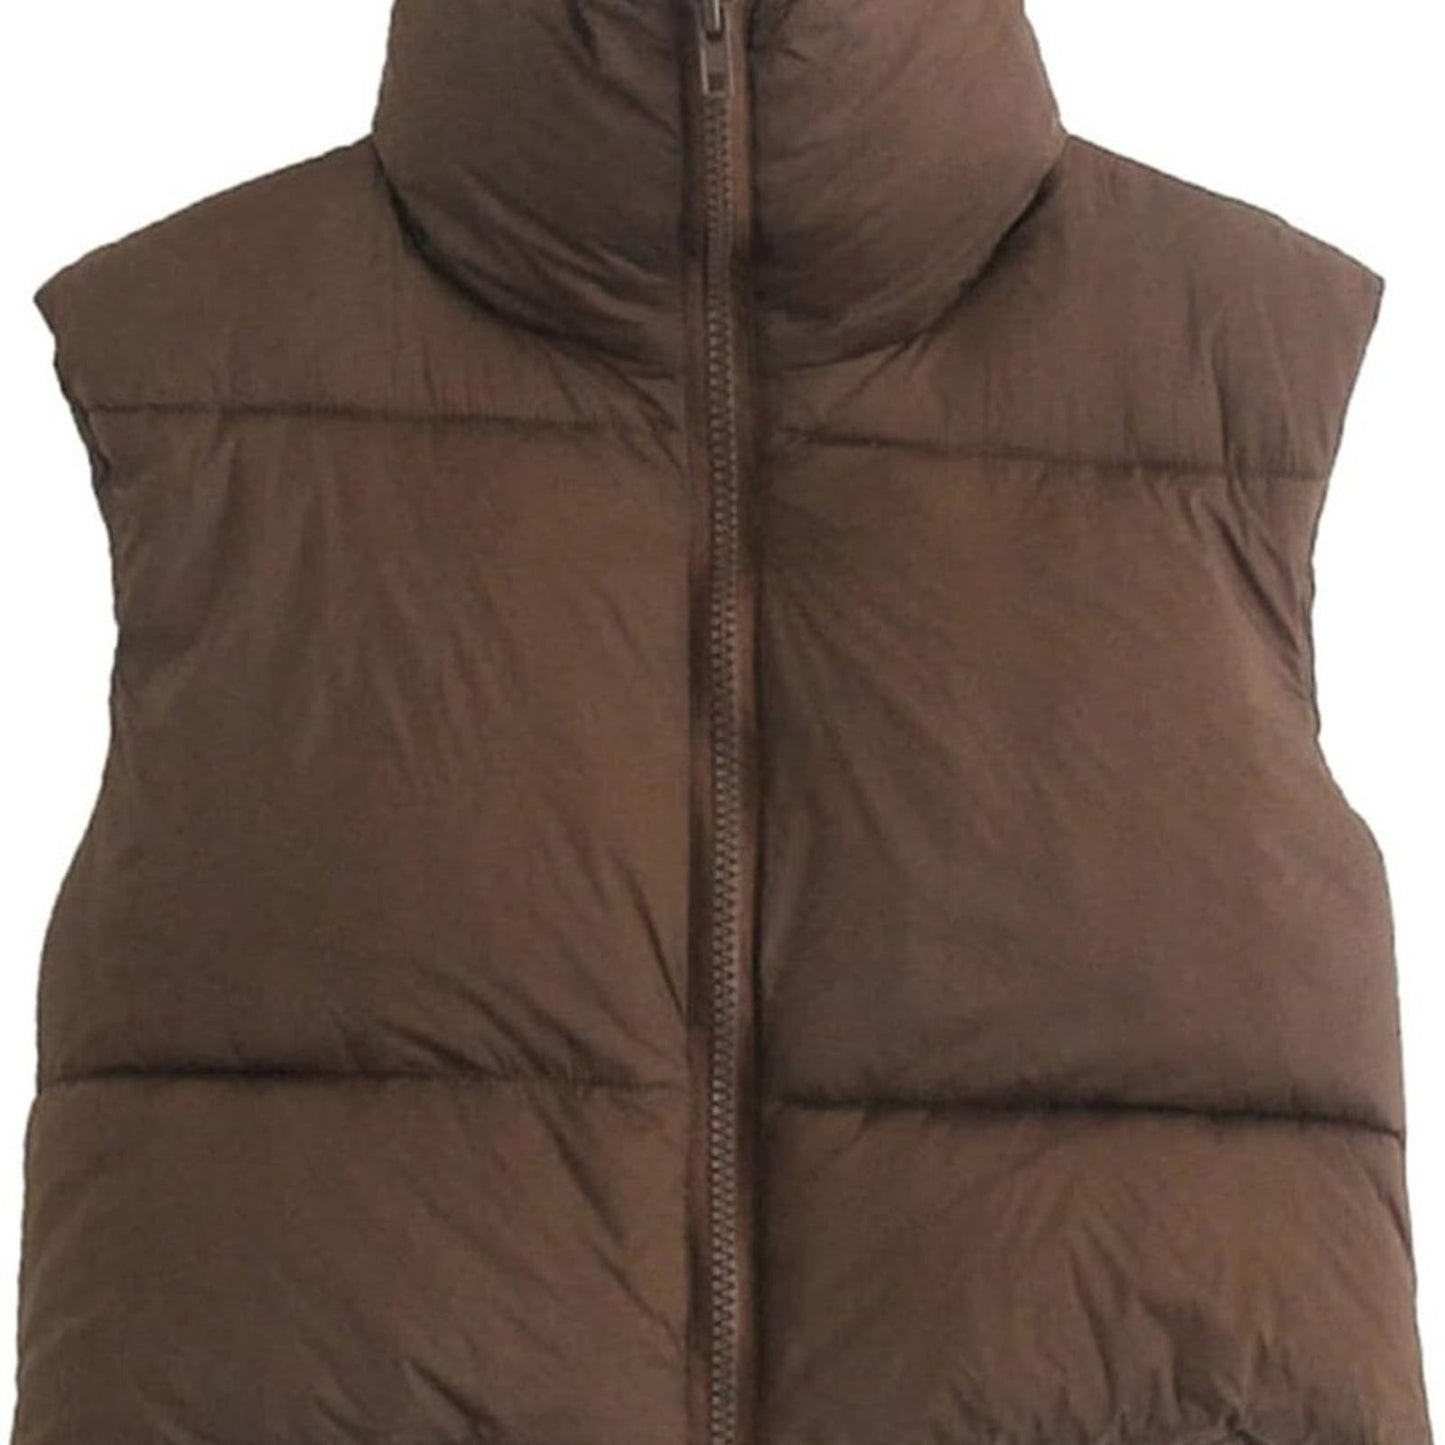 Gihuo Womens Cropped Puffer Vest Winter Crop Vest Lightweight Sleeveless Warm LG